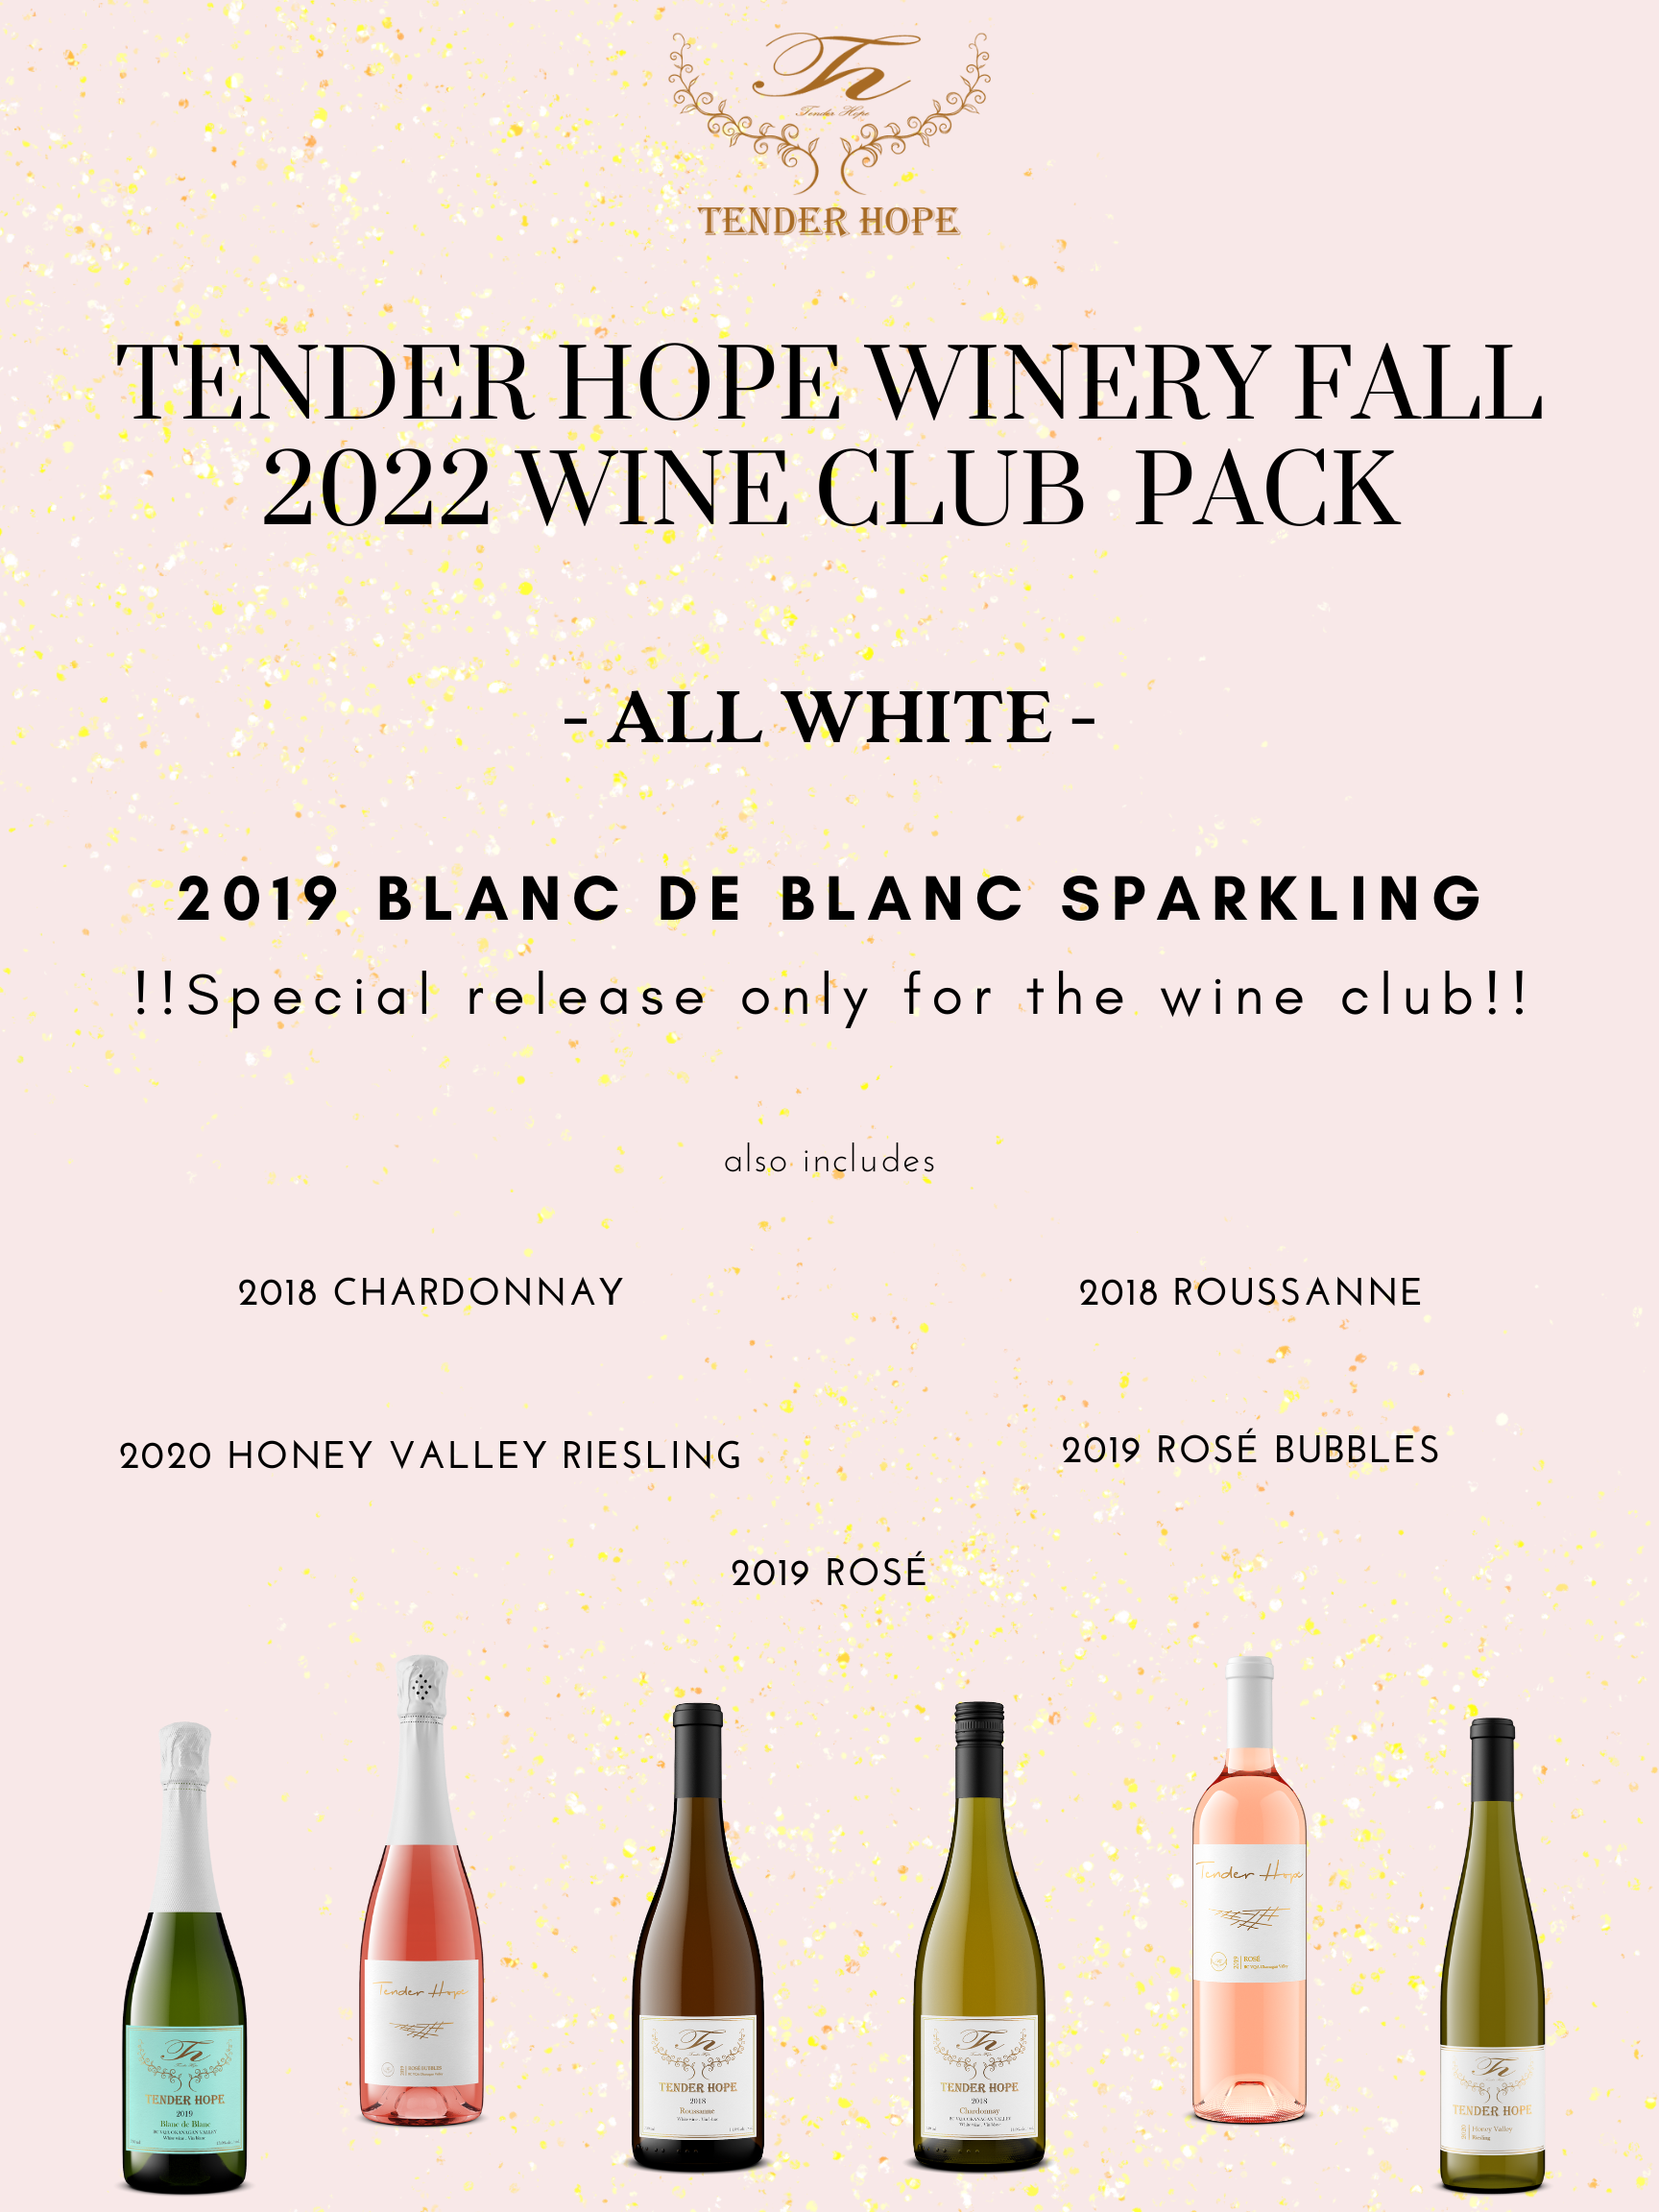 Tender Hope Winery Fall 2022 Wine Club pack - All White